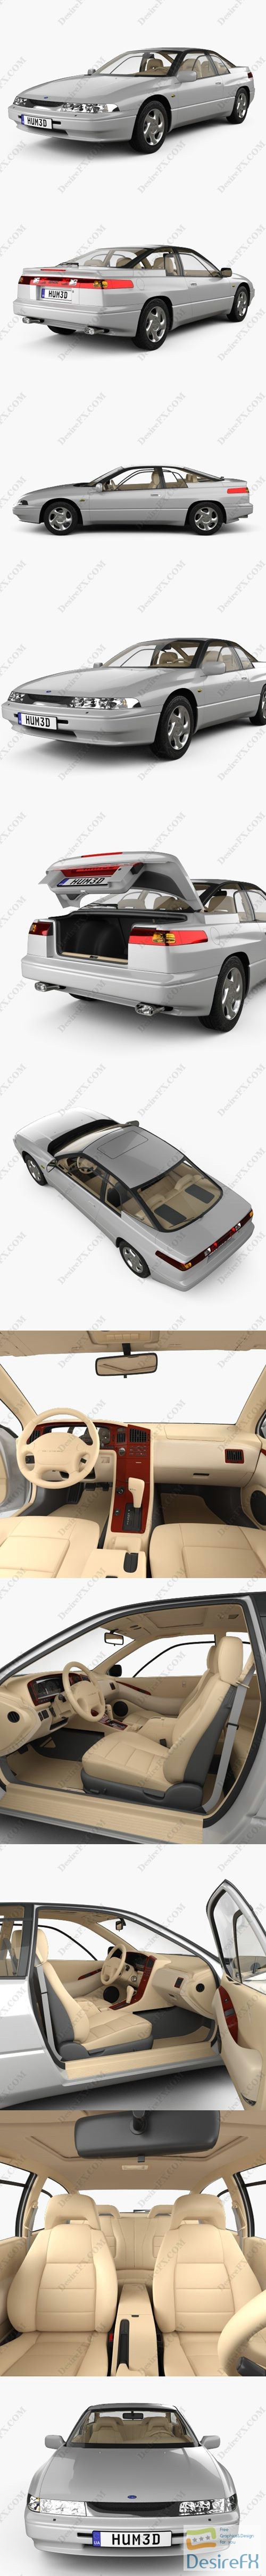 Subaru SVX with HQ interior 1992 3D Model